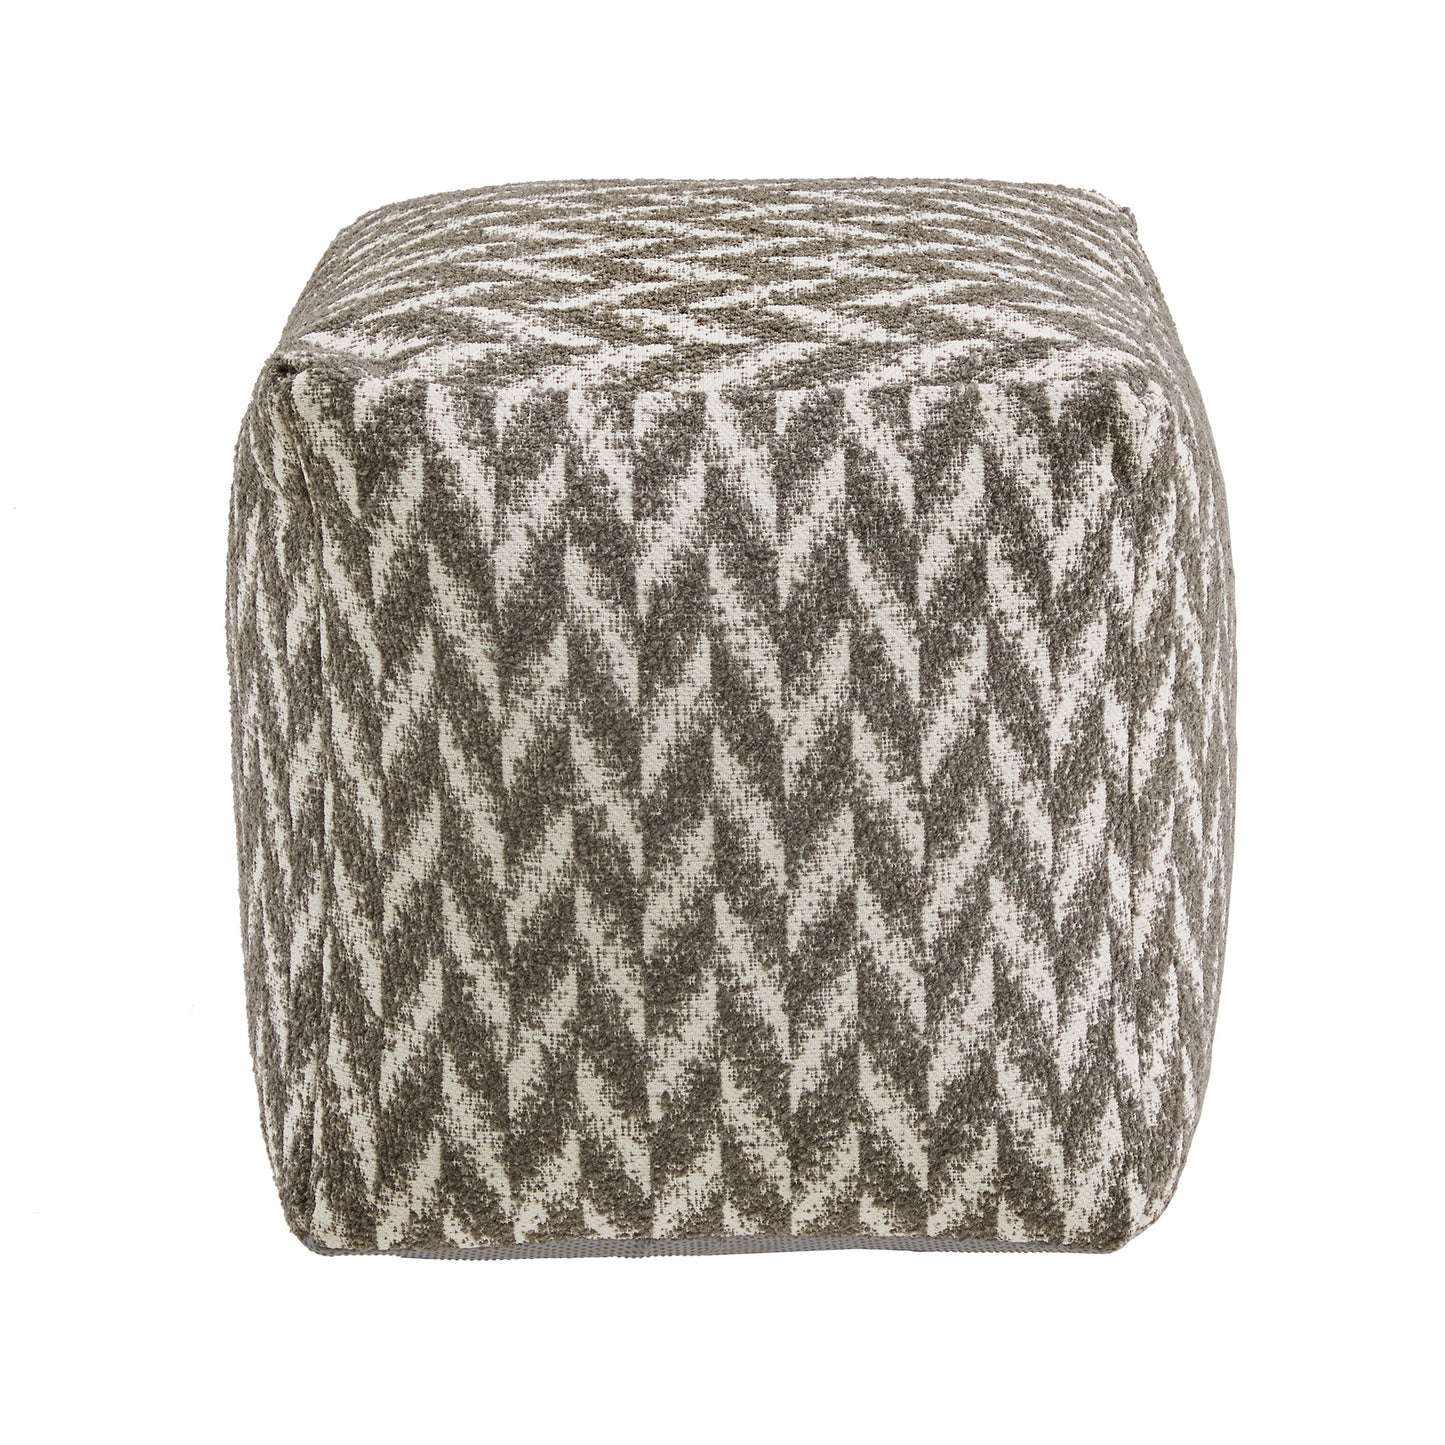 Upholstered Square Pouf Ottoman - Grey & White Herringbone Pattern Fabric